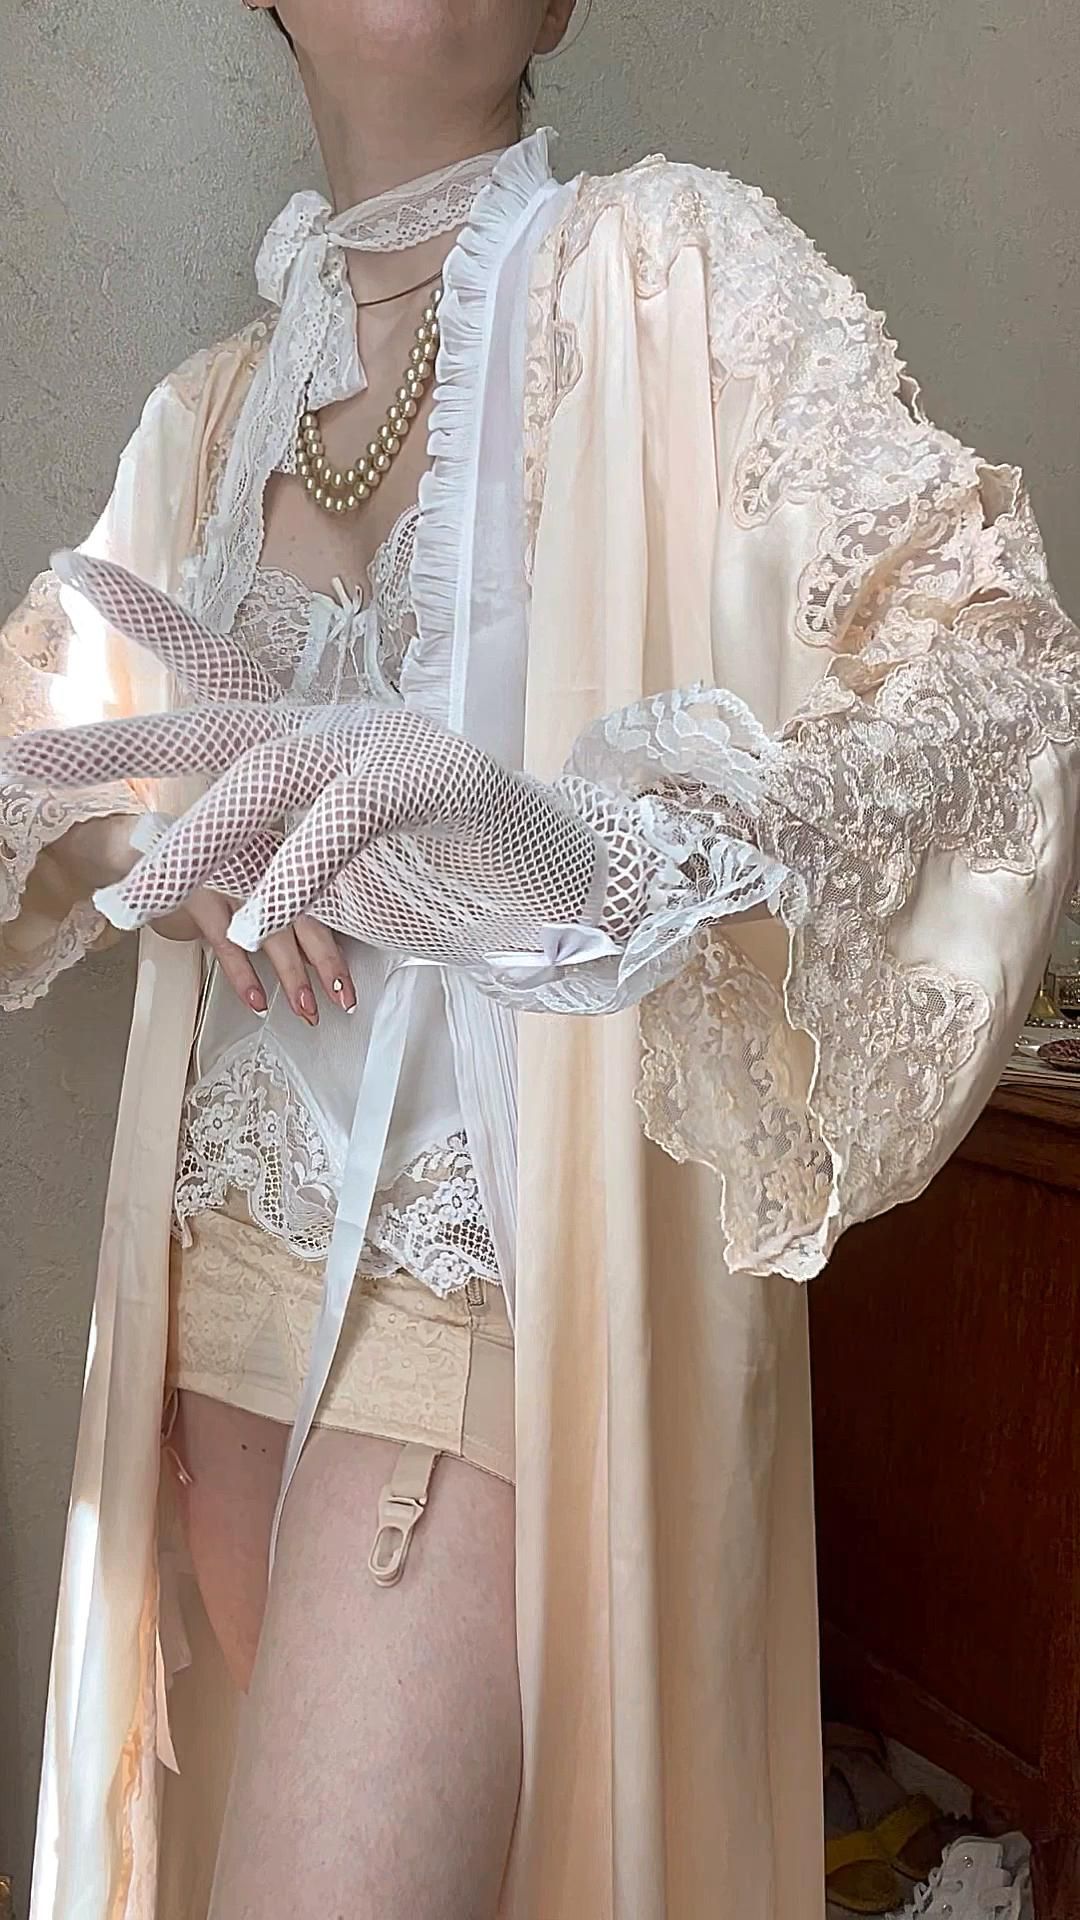 Peach Lace Dress Outfit Ideas